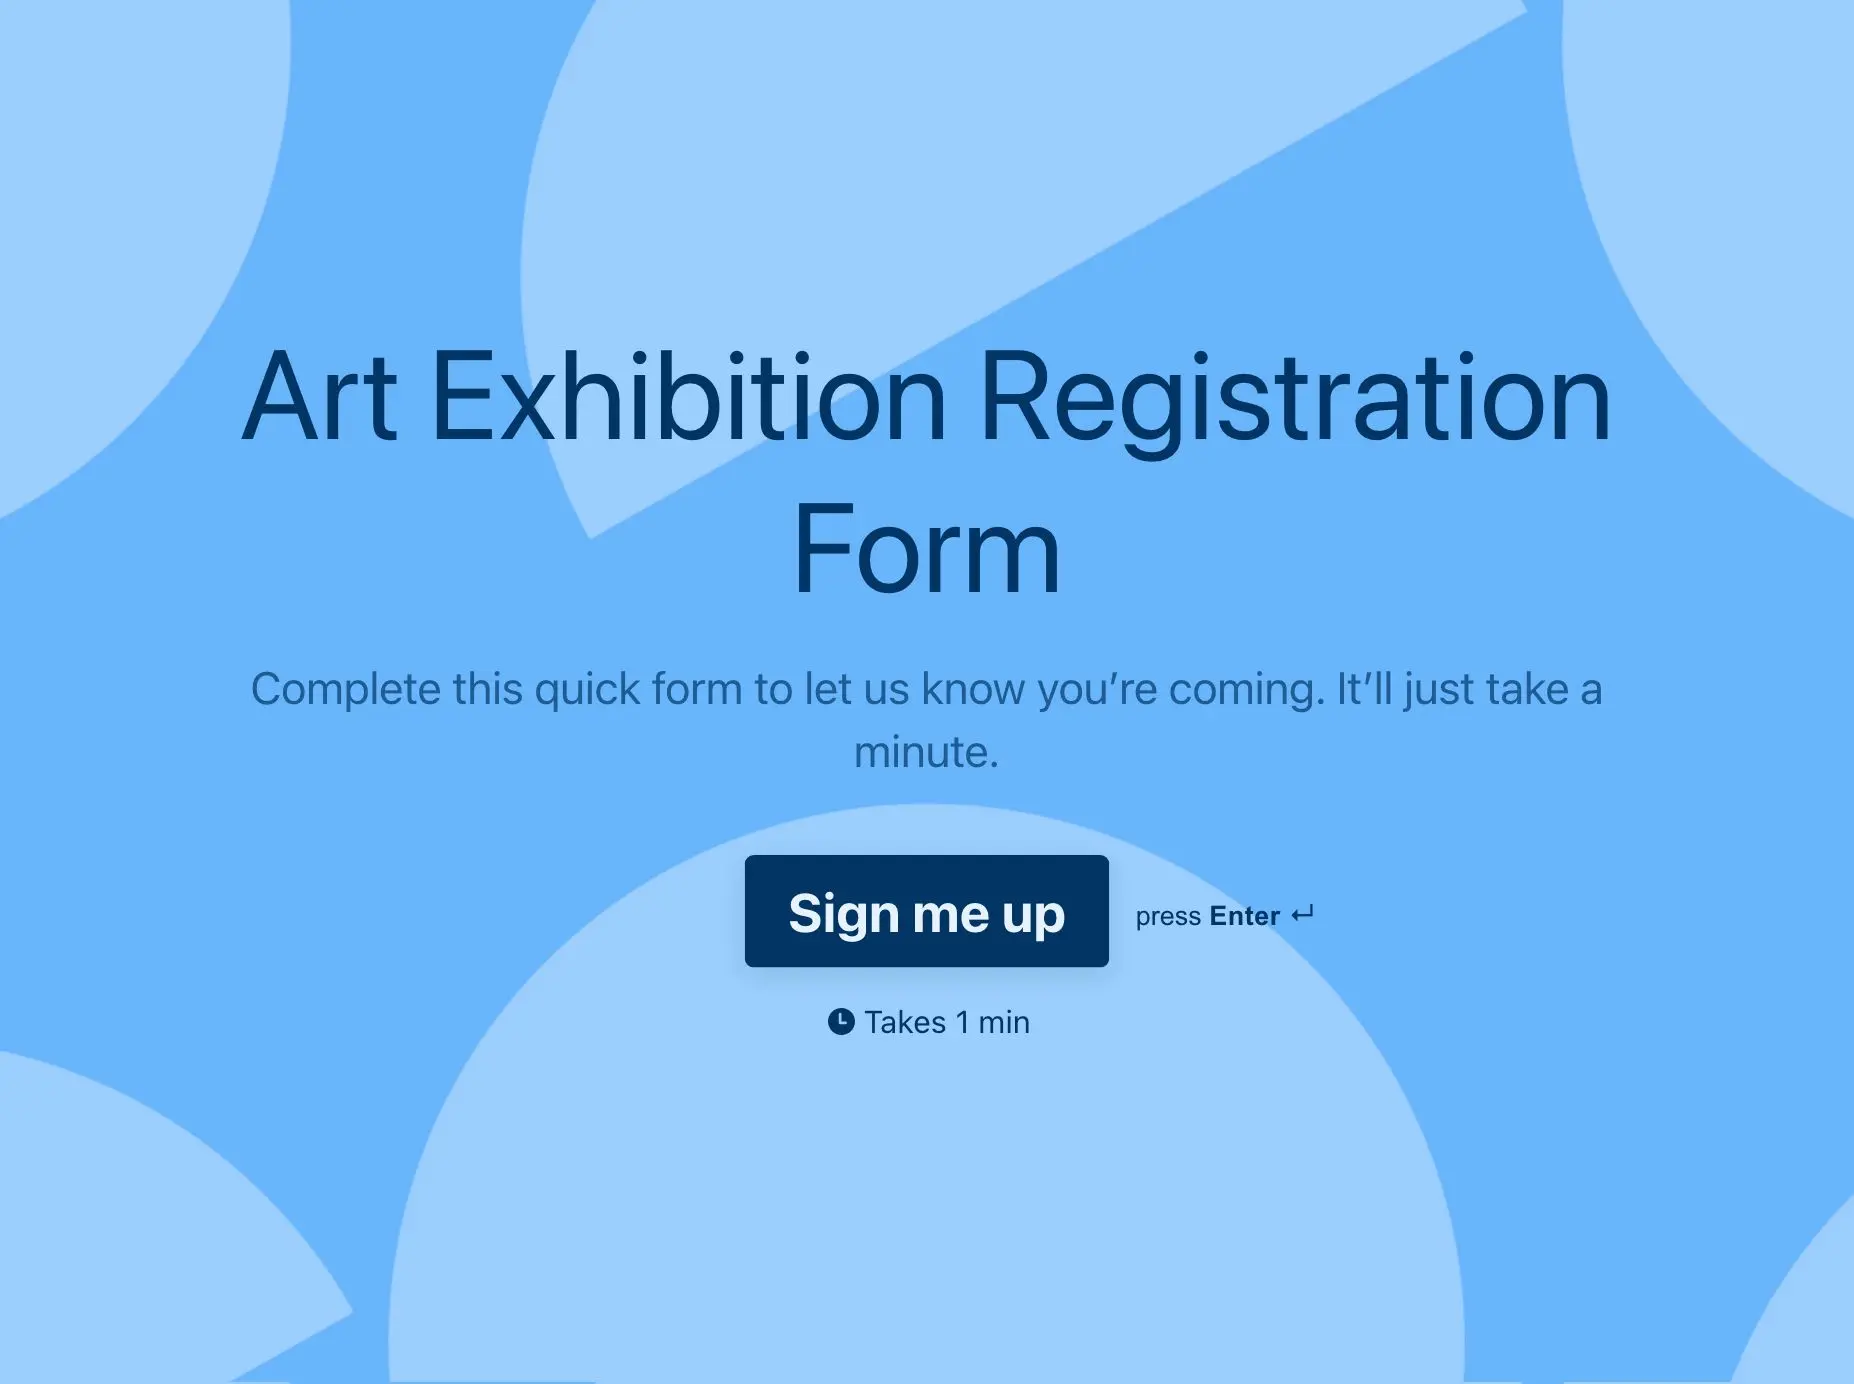 Art Exhibition Registration Form Template Hero